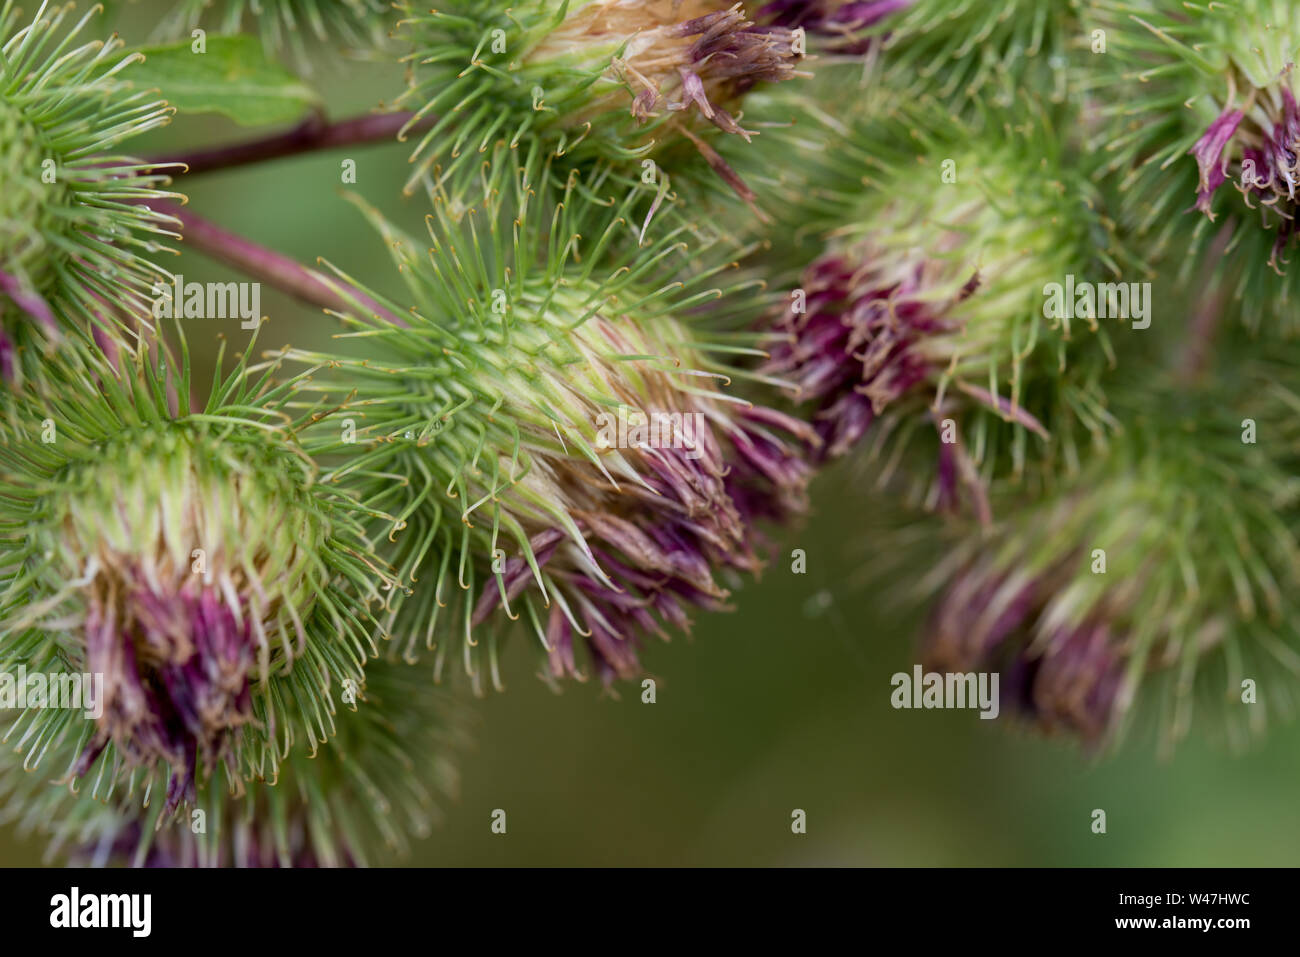 arctium, burdock flowers closeup selctive focus Stock Photo